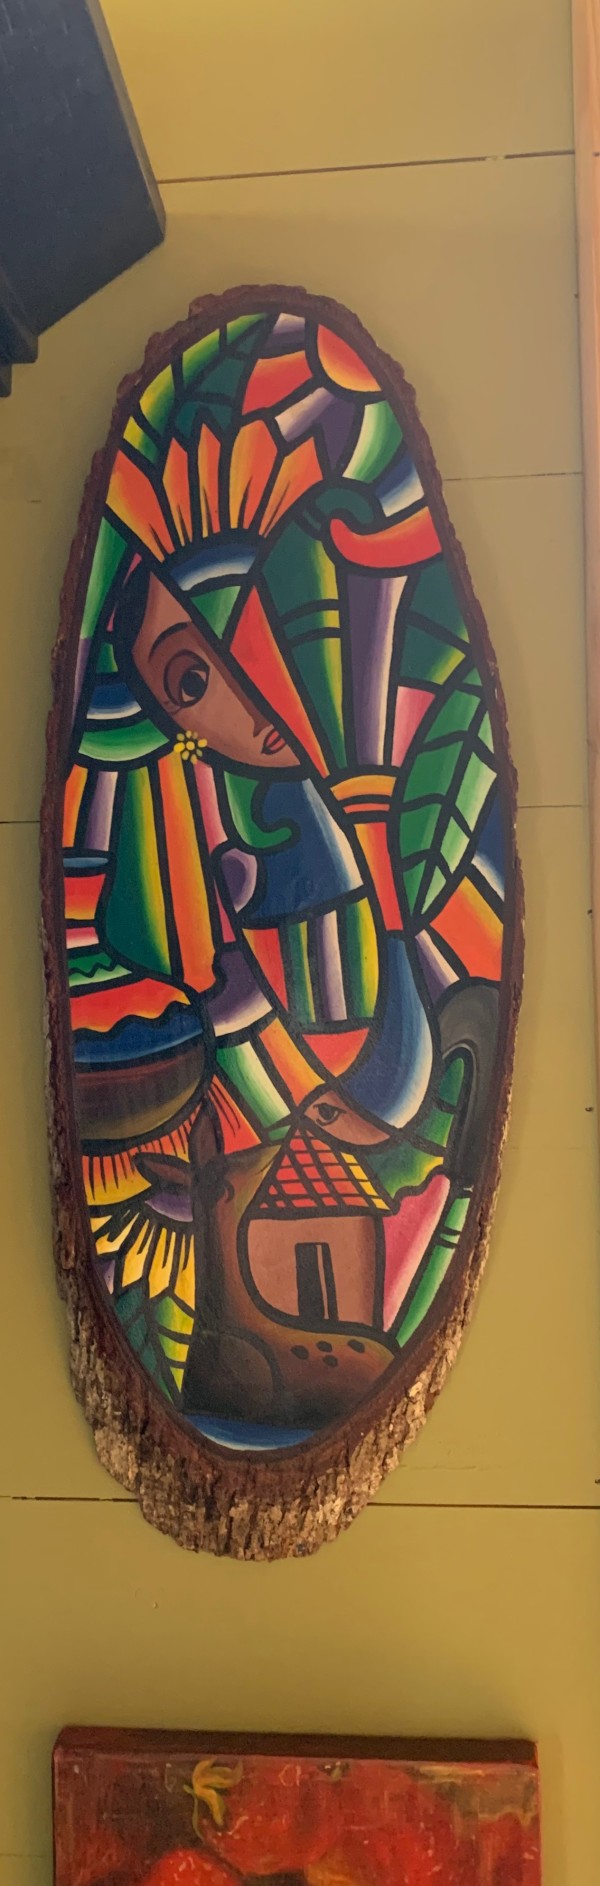 Souvenir plaque from Guatamala by Kathleen Hayek